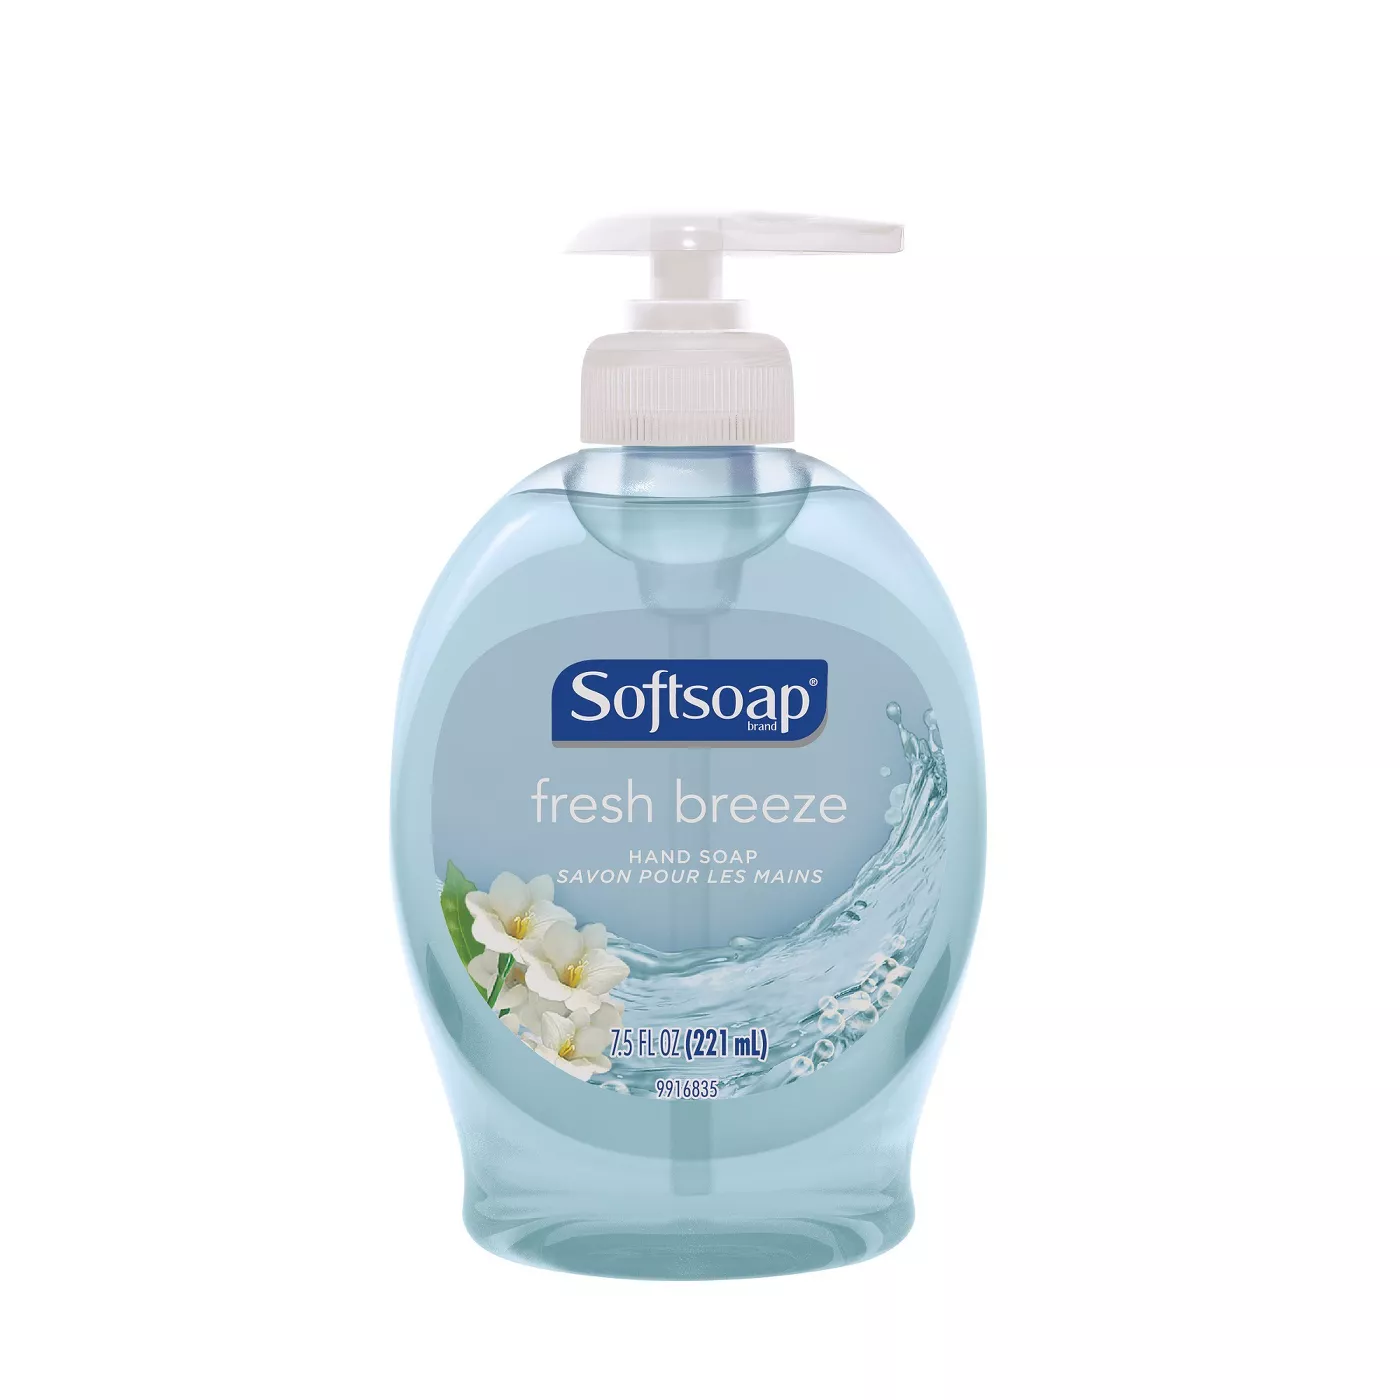 Softsoap Liquid Hand Soap Pump - Fresh Breeze - 7.5 fl oz - image 1 of 4